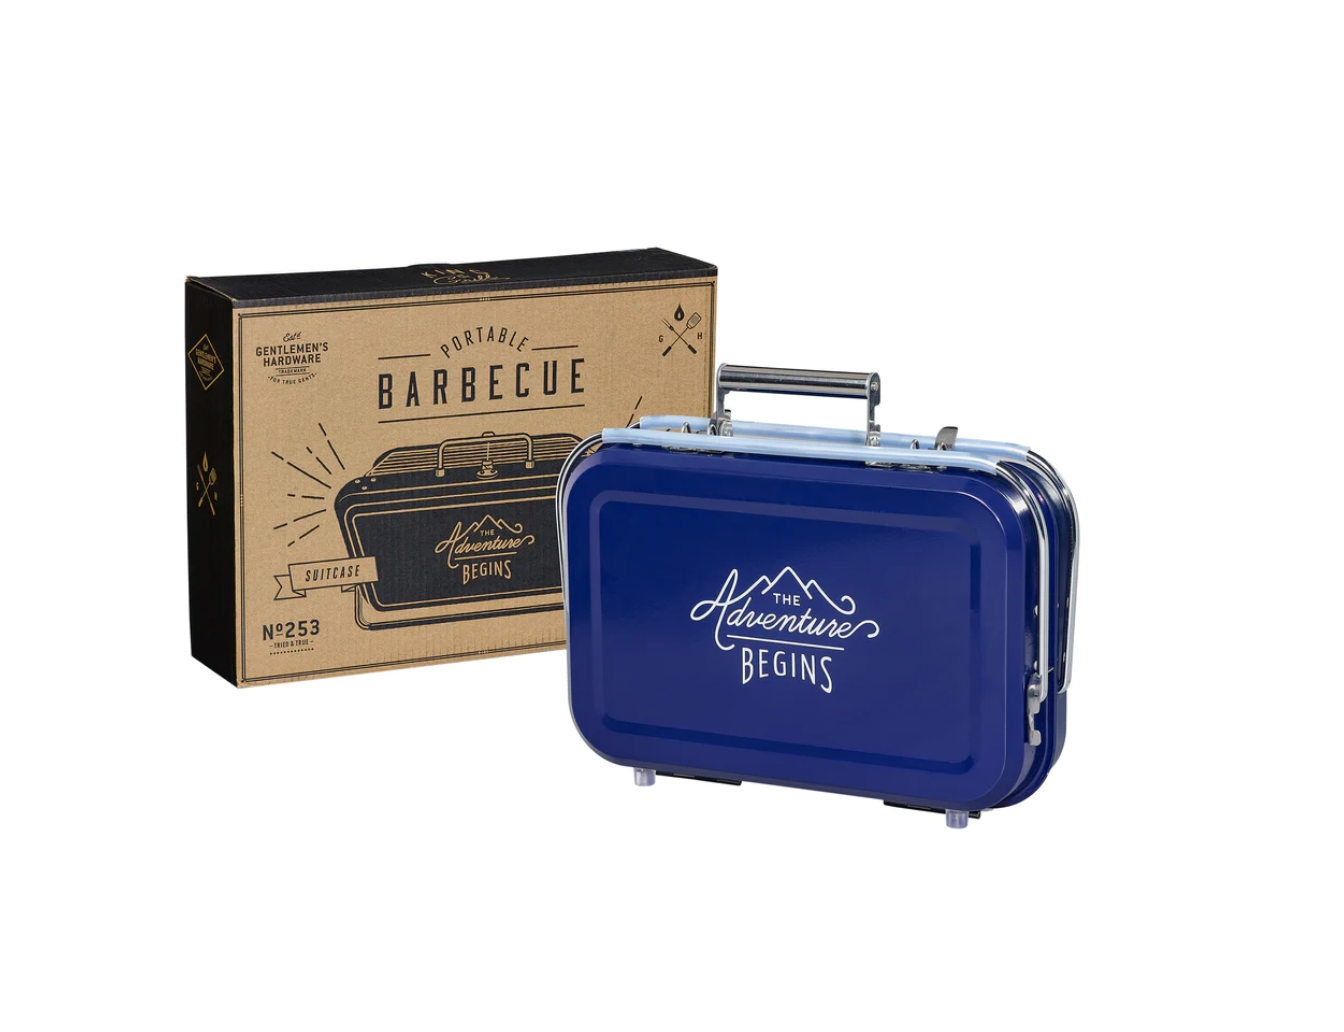 Portable BBQ Briefcase Grill